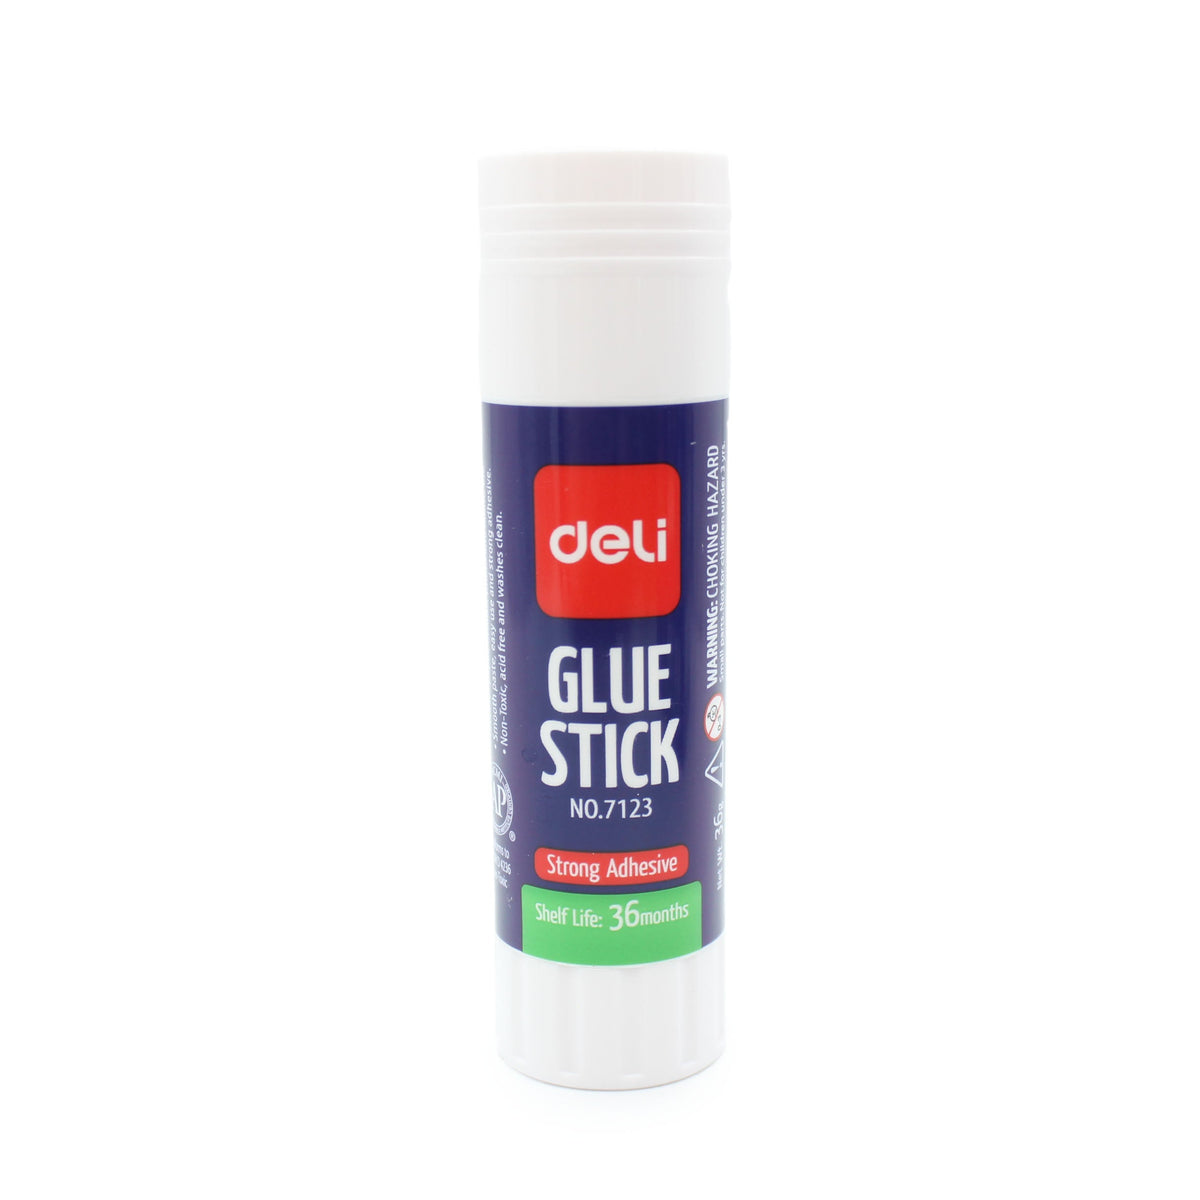 Glue Stick 40g (Eco-friendly)